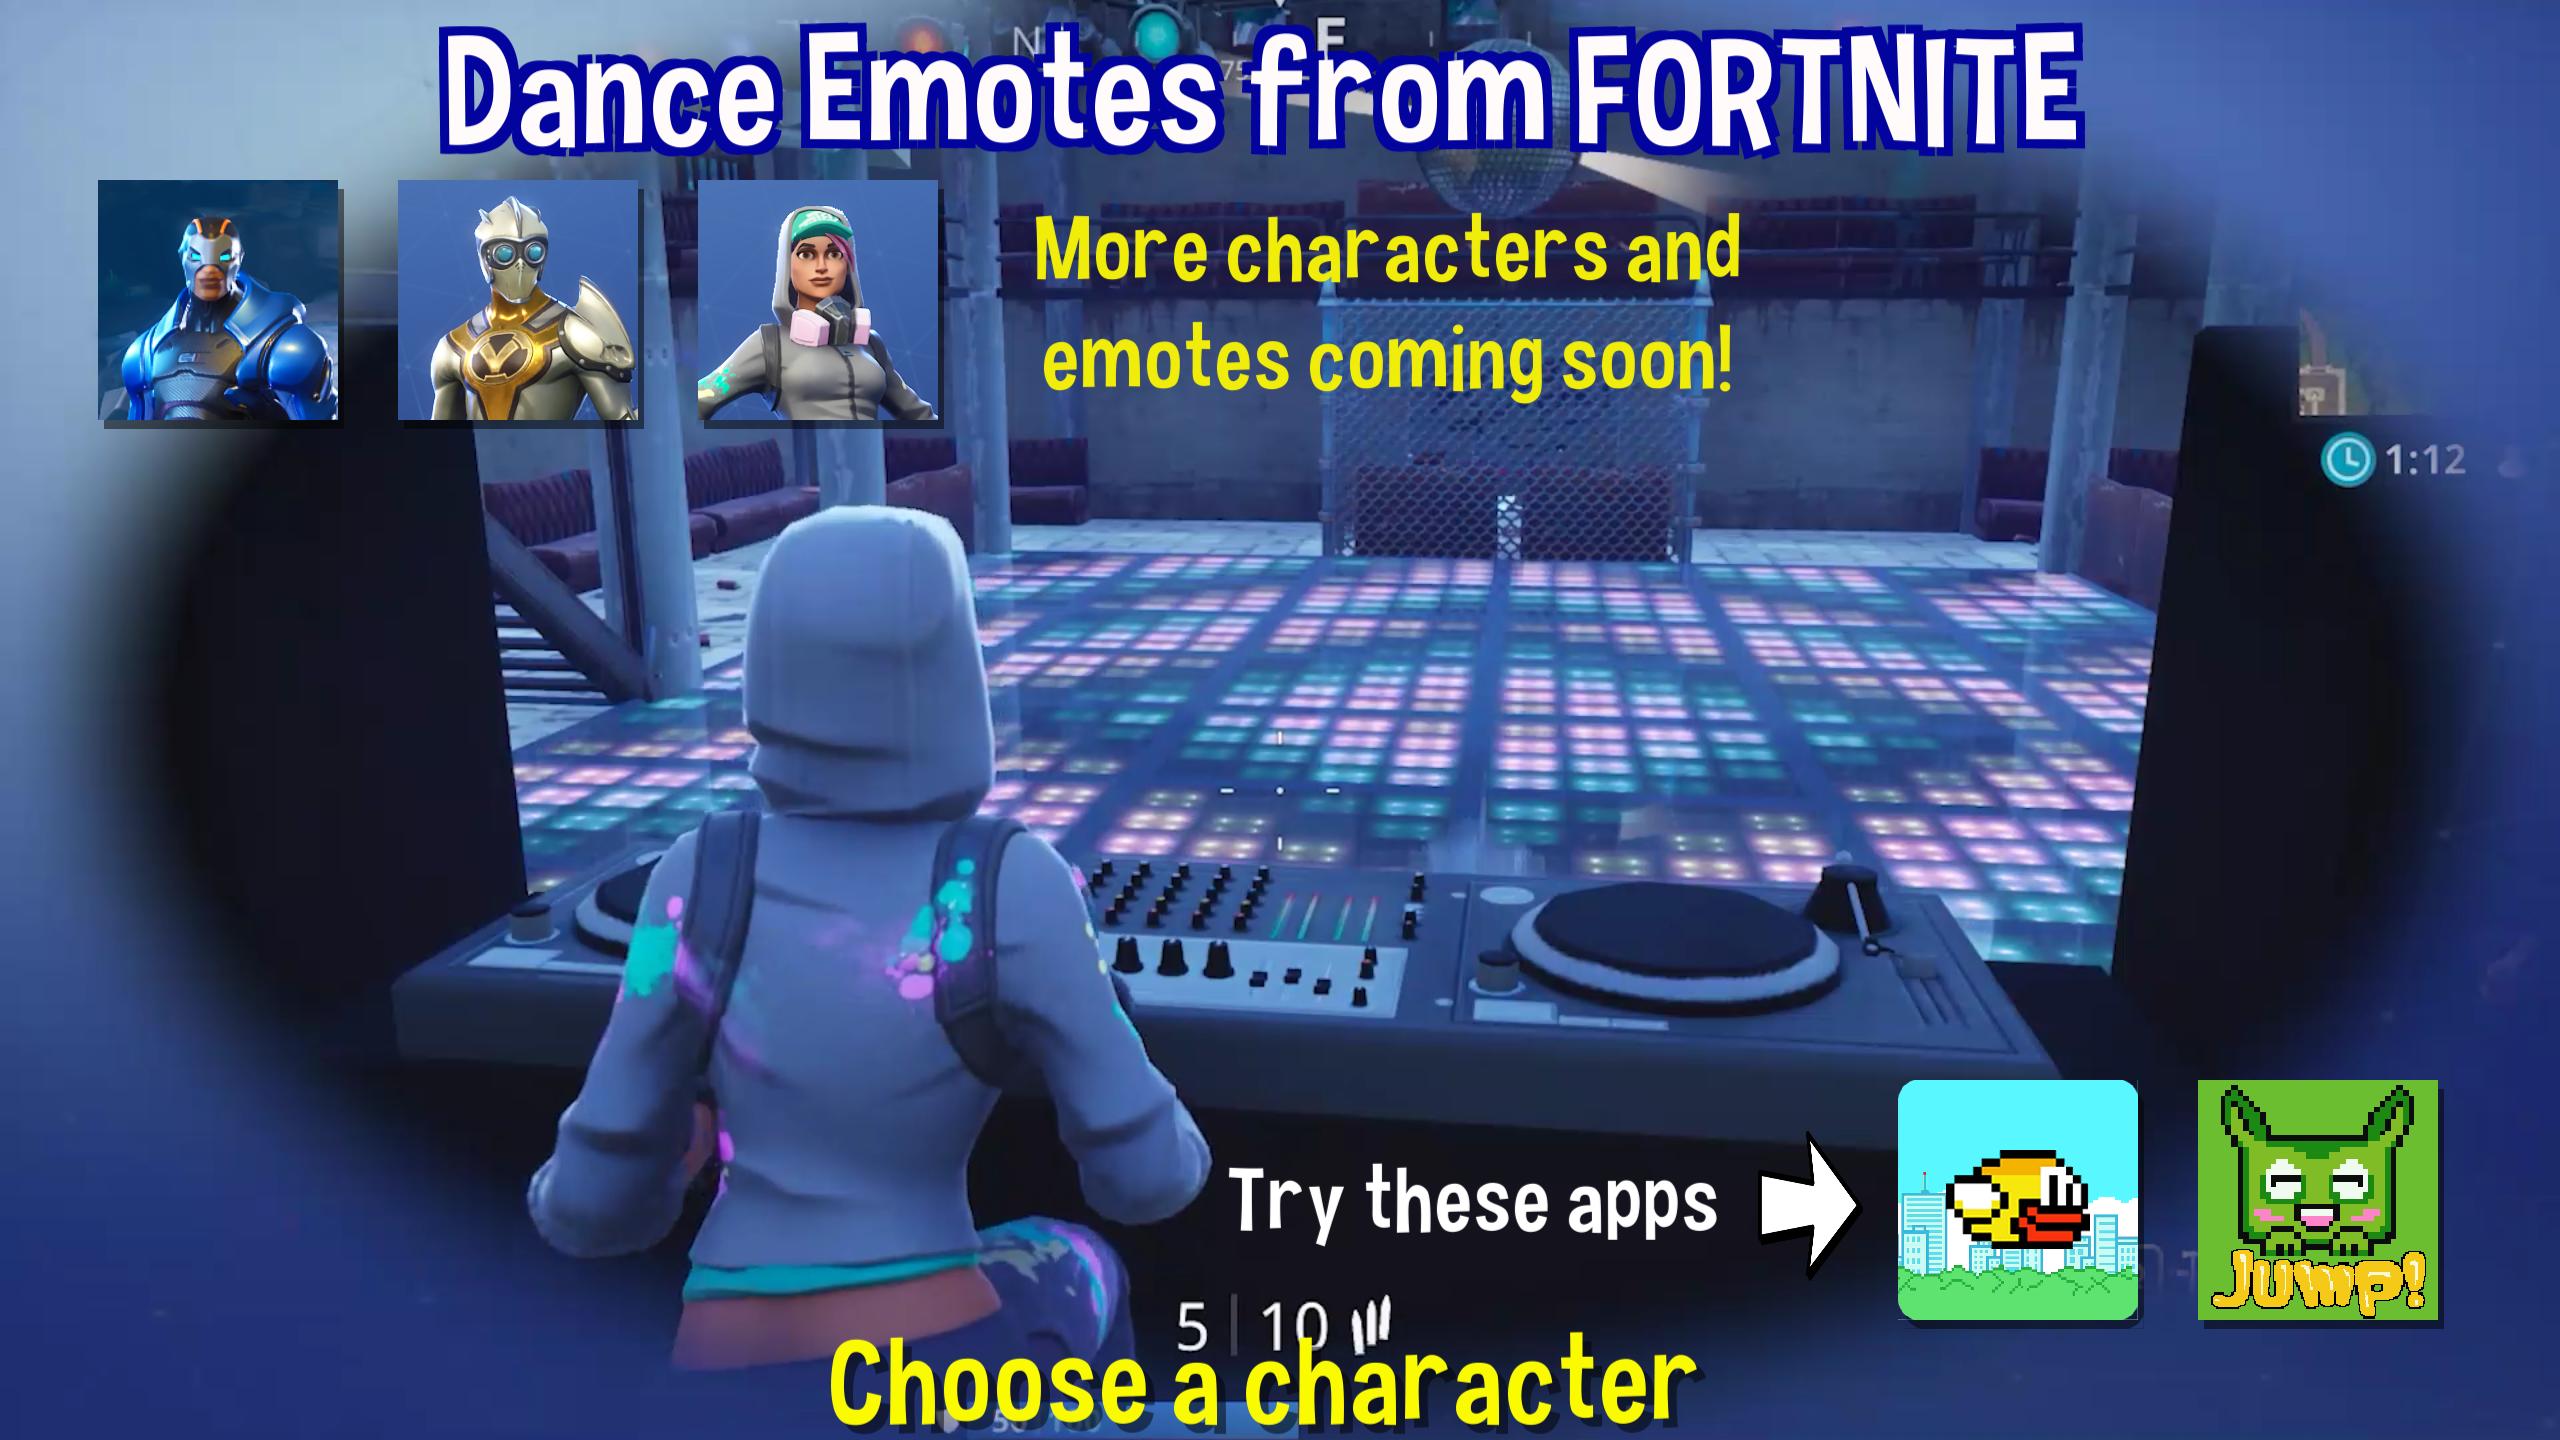 Fortnite Dance Emotes Roblox Vbuckgeneratorupdatecf - roblox vs fortnite vs minecraft wholefed org 207 246 80 62 dsl